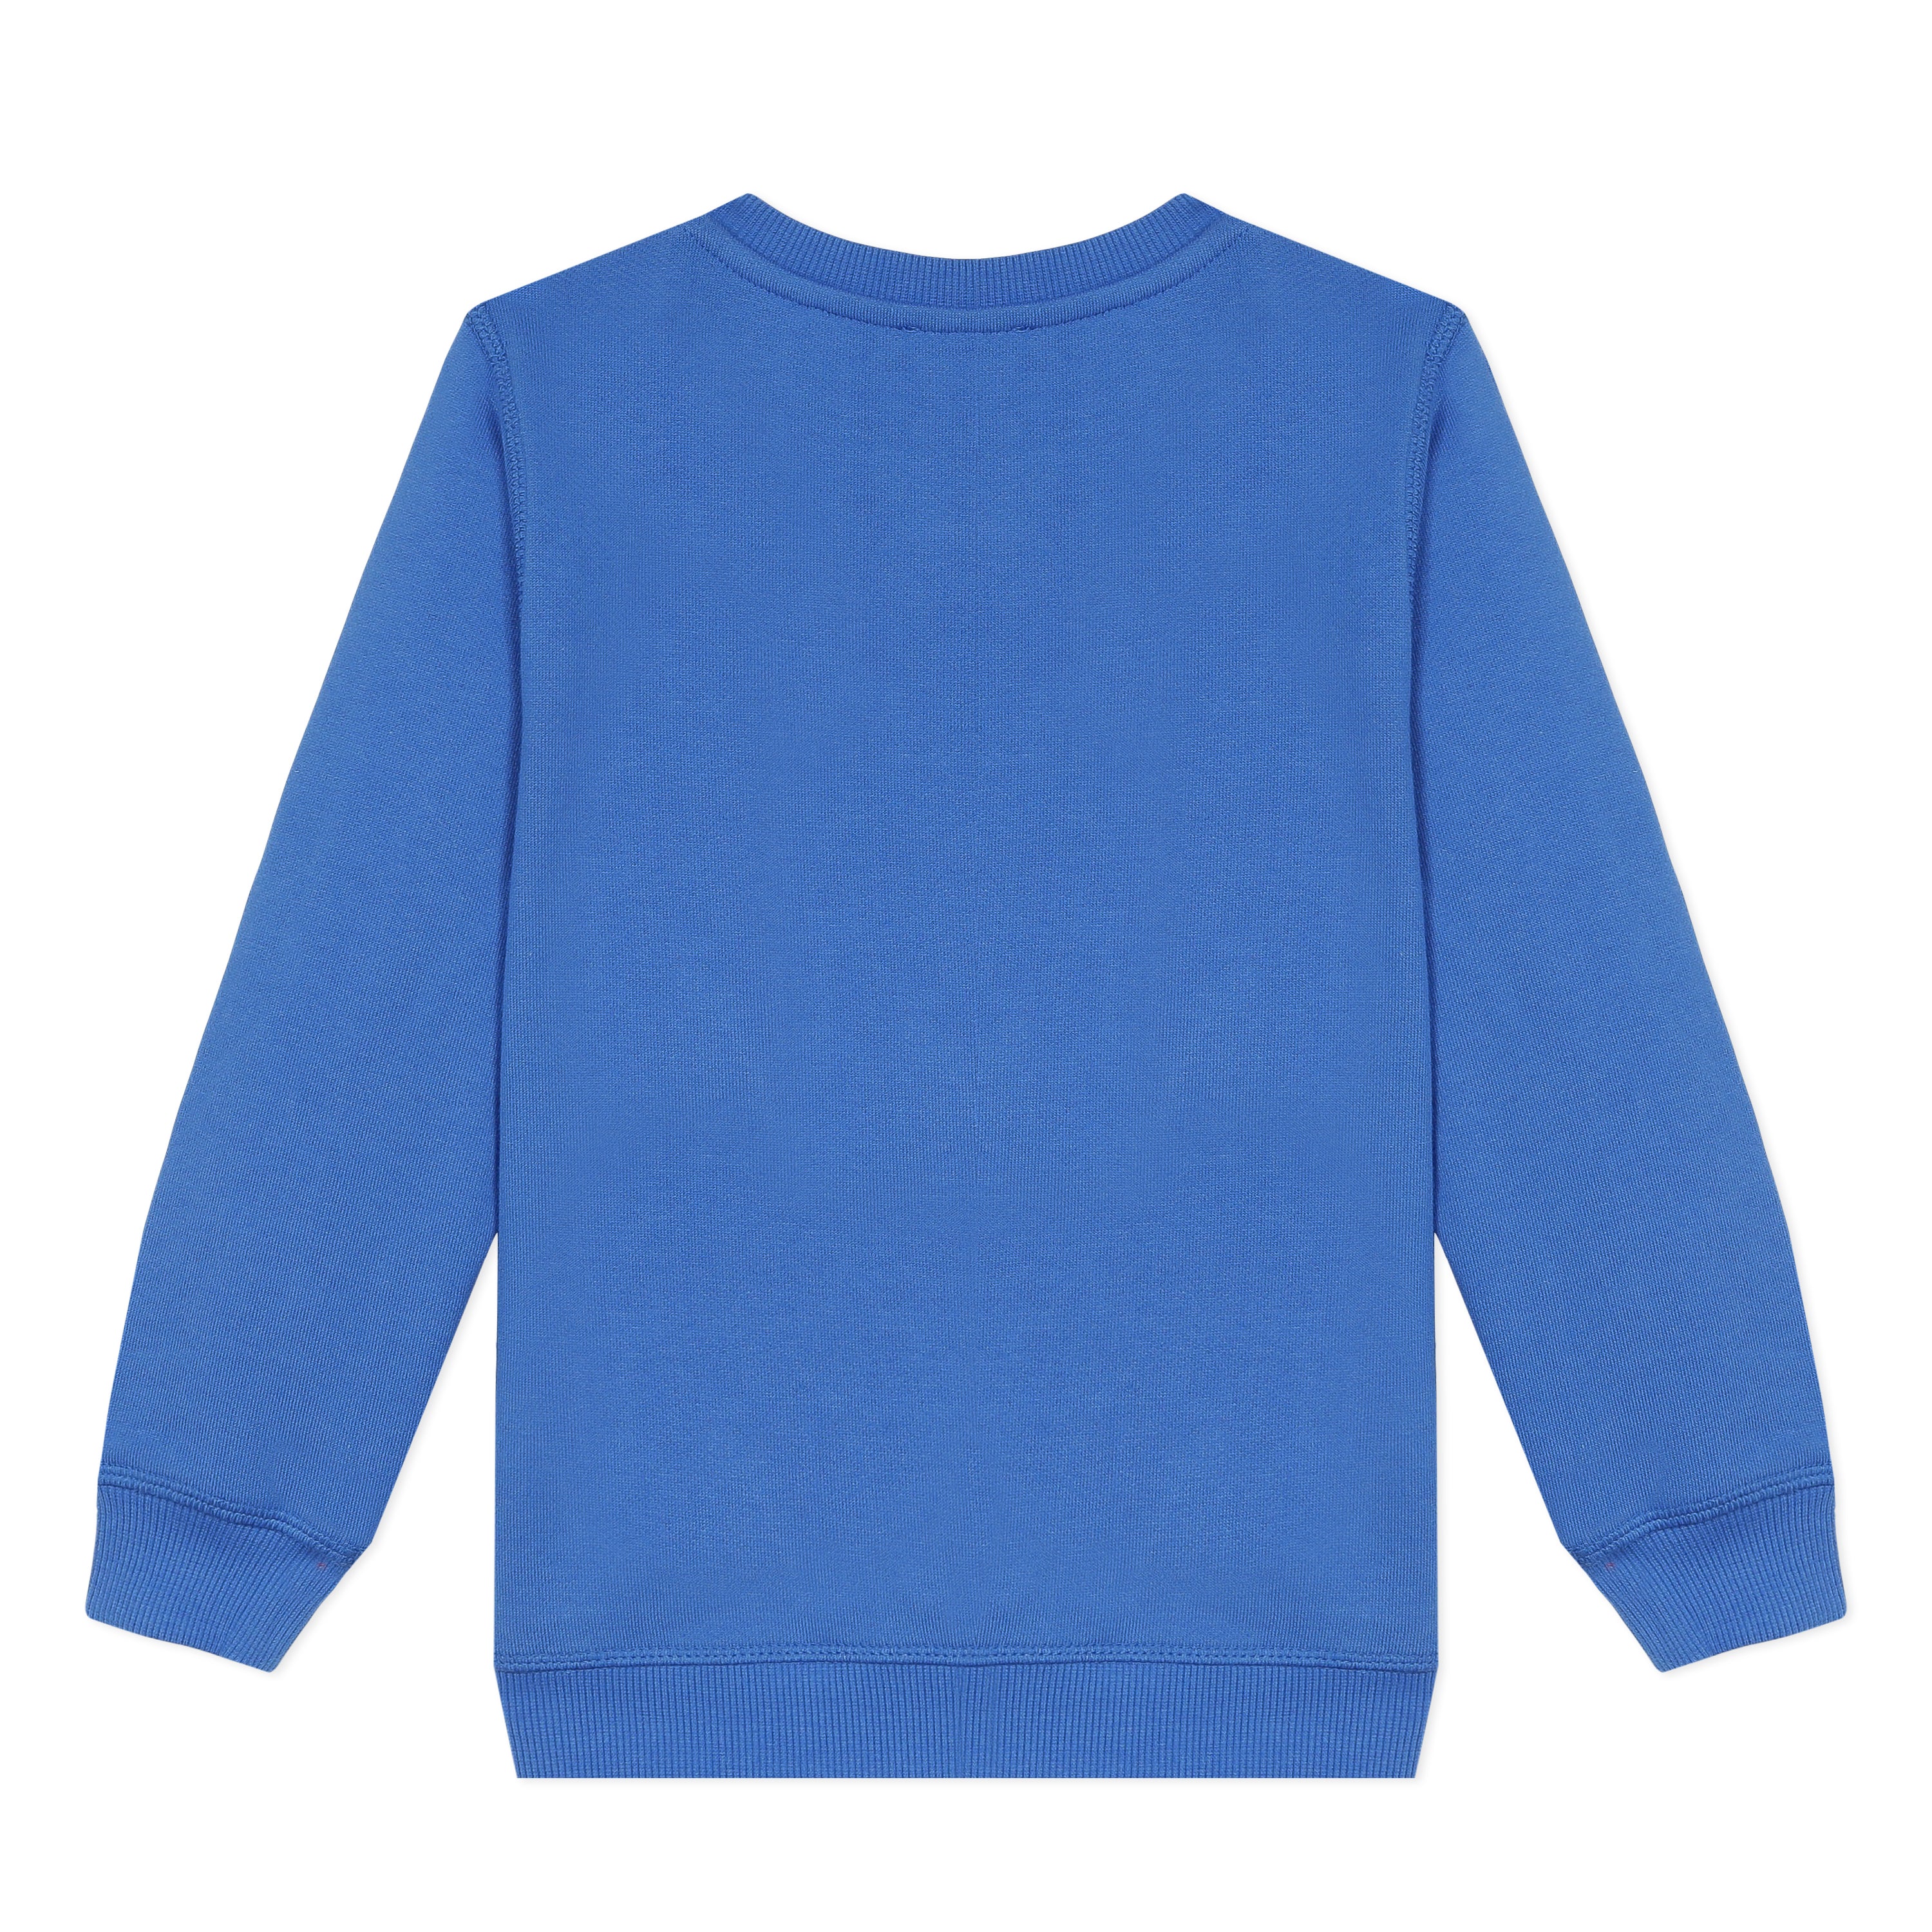 Boys Vivid Blue Cotton Sweatshirt